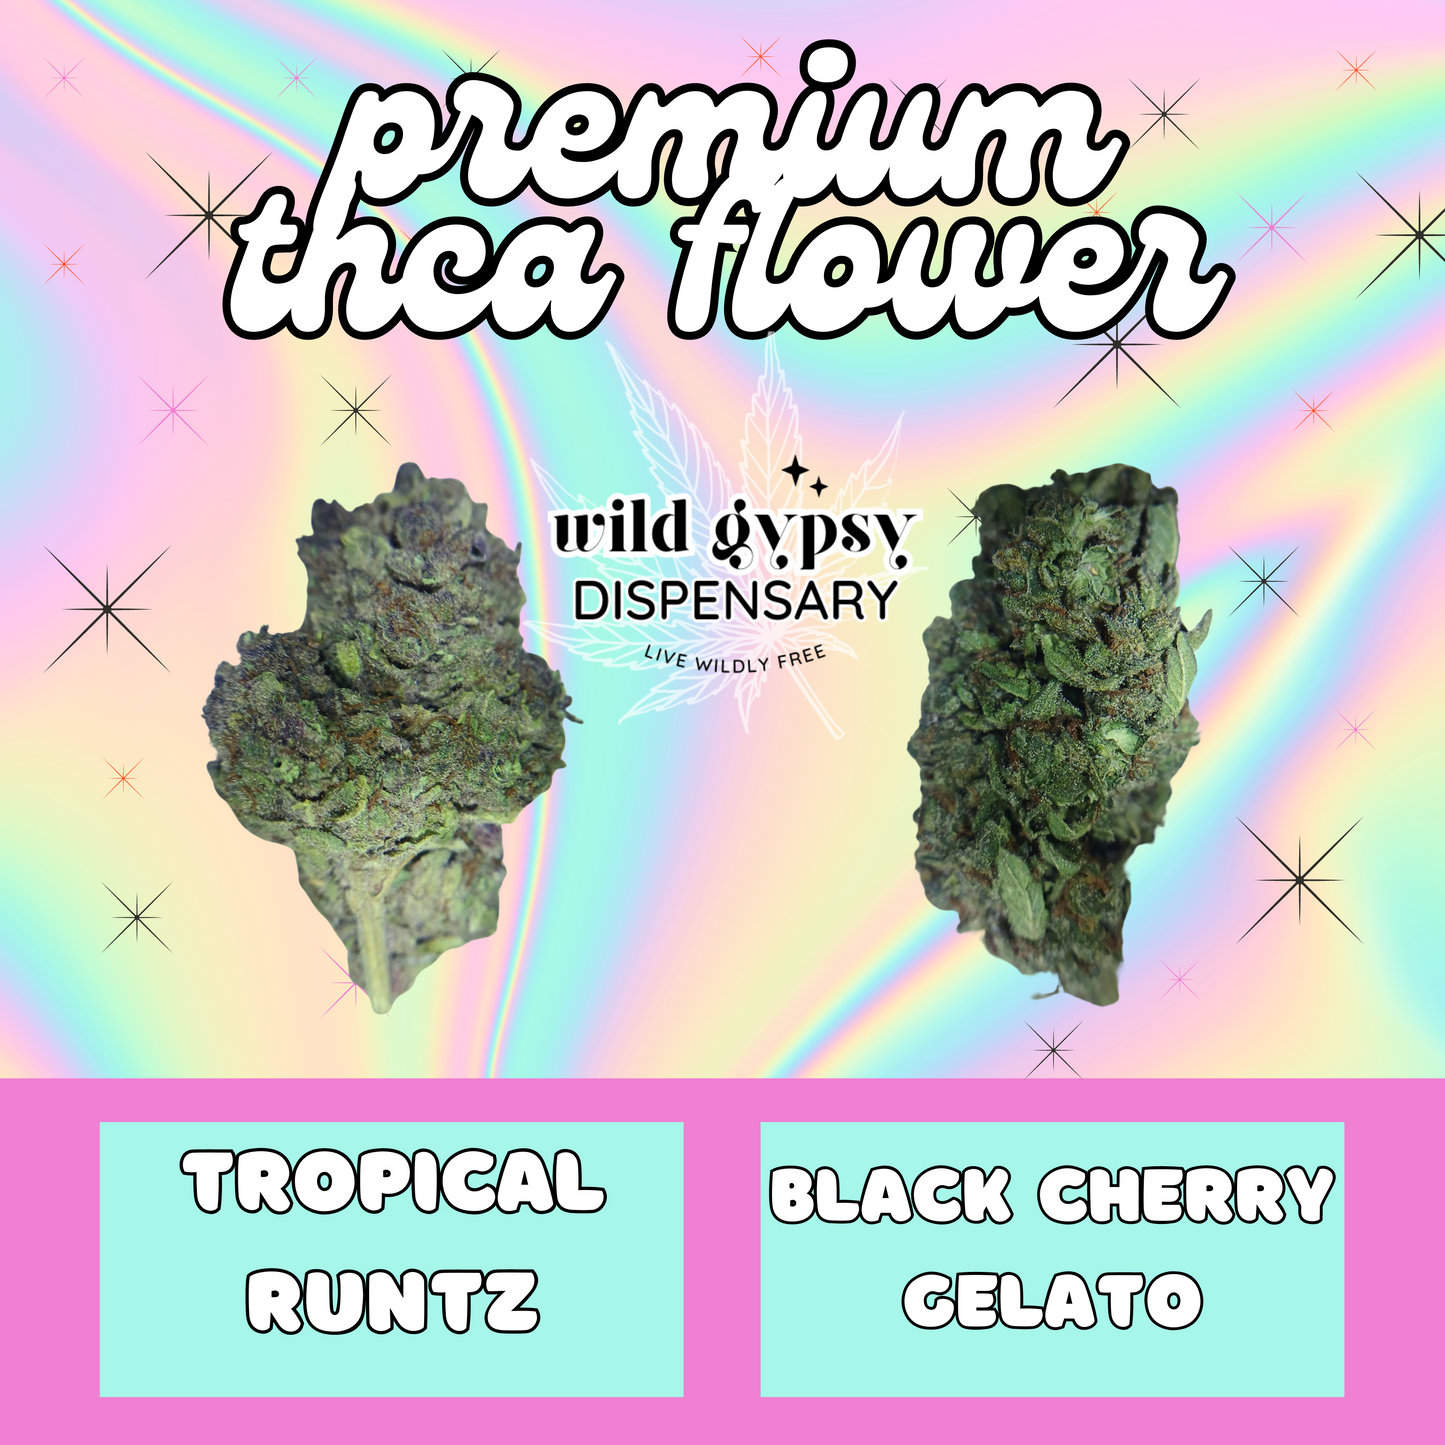 Premium THCA Flower - 3.5g. | Tropical Runtz